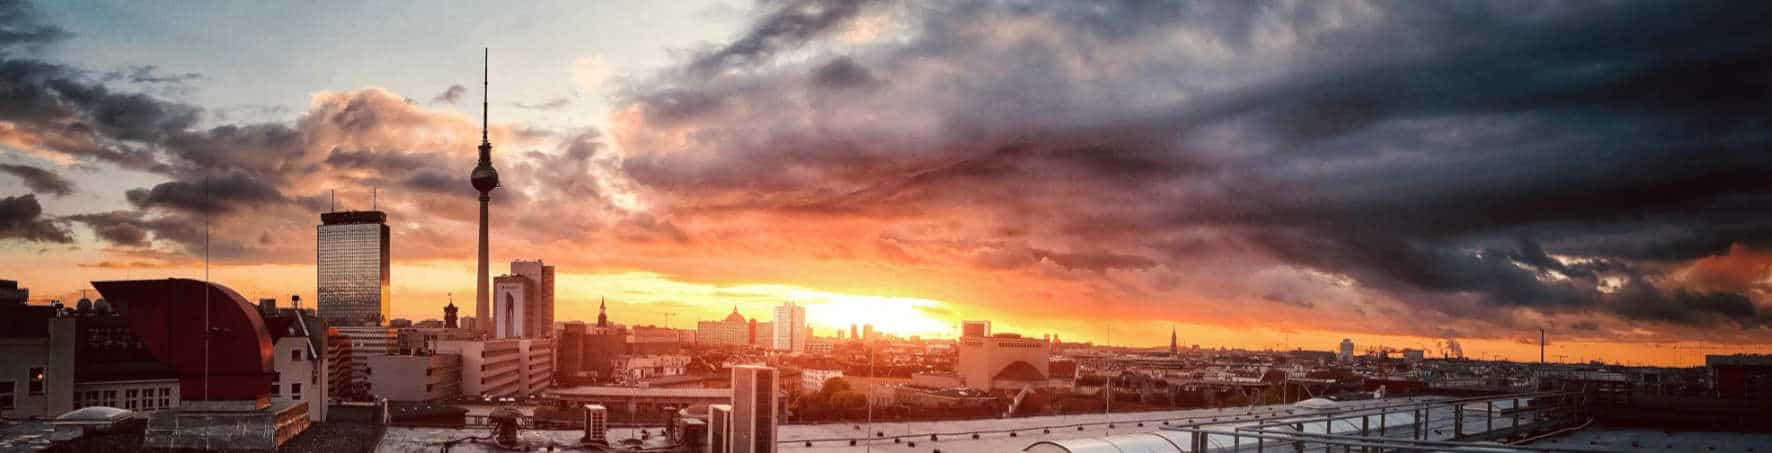 Skyline of Berlin with sunset